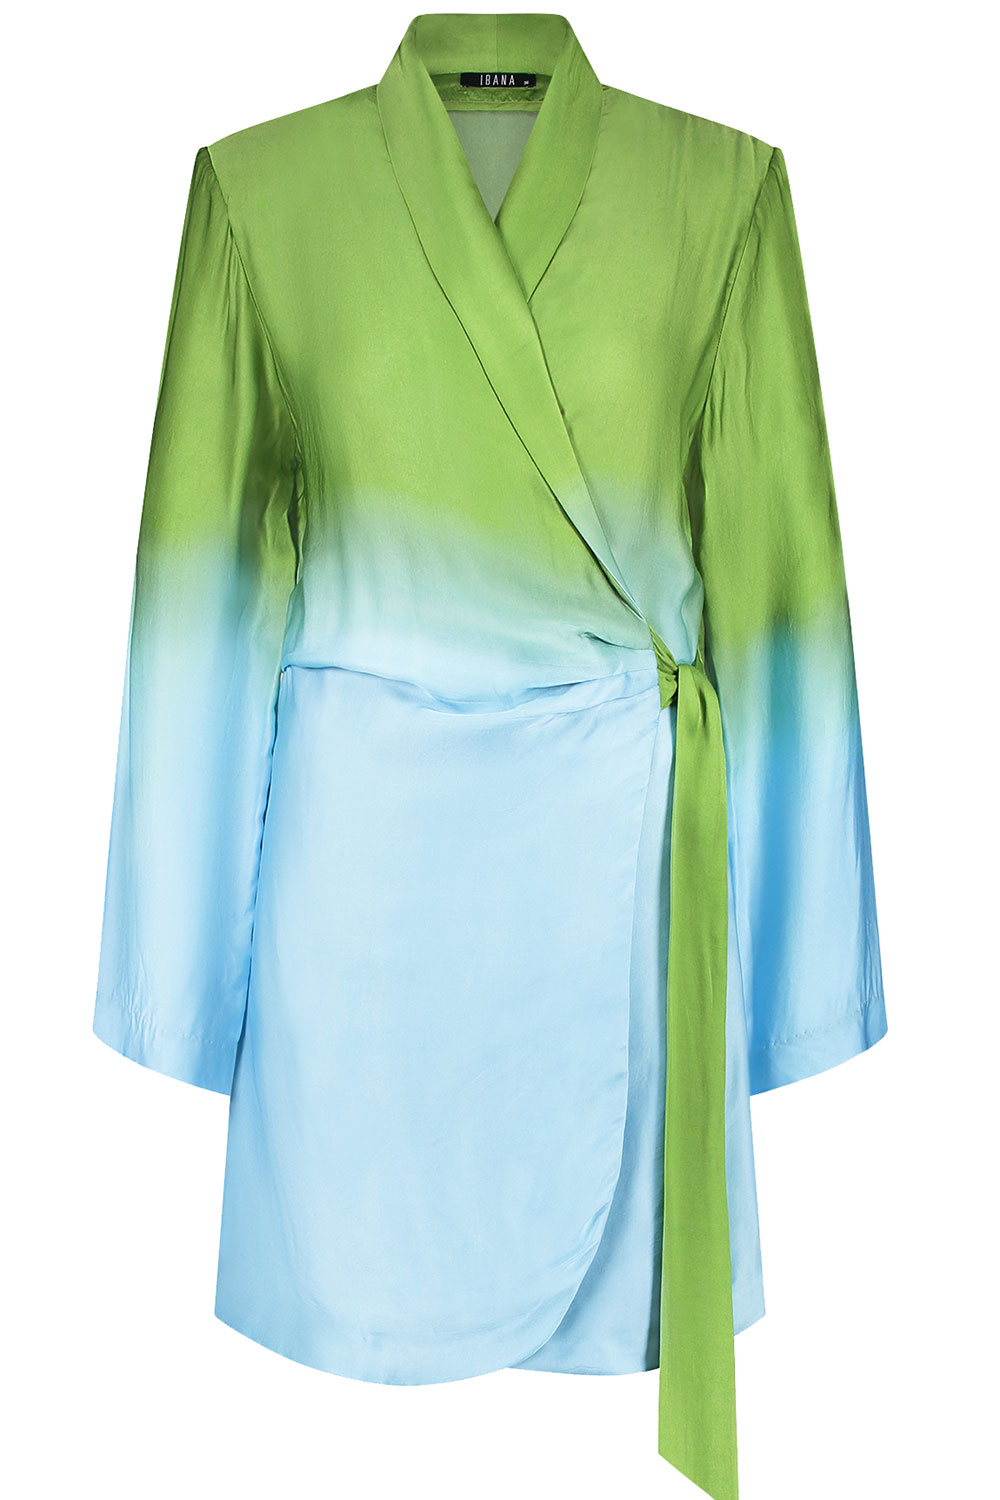 Ibana Tie-dye jurk Dally groen